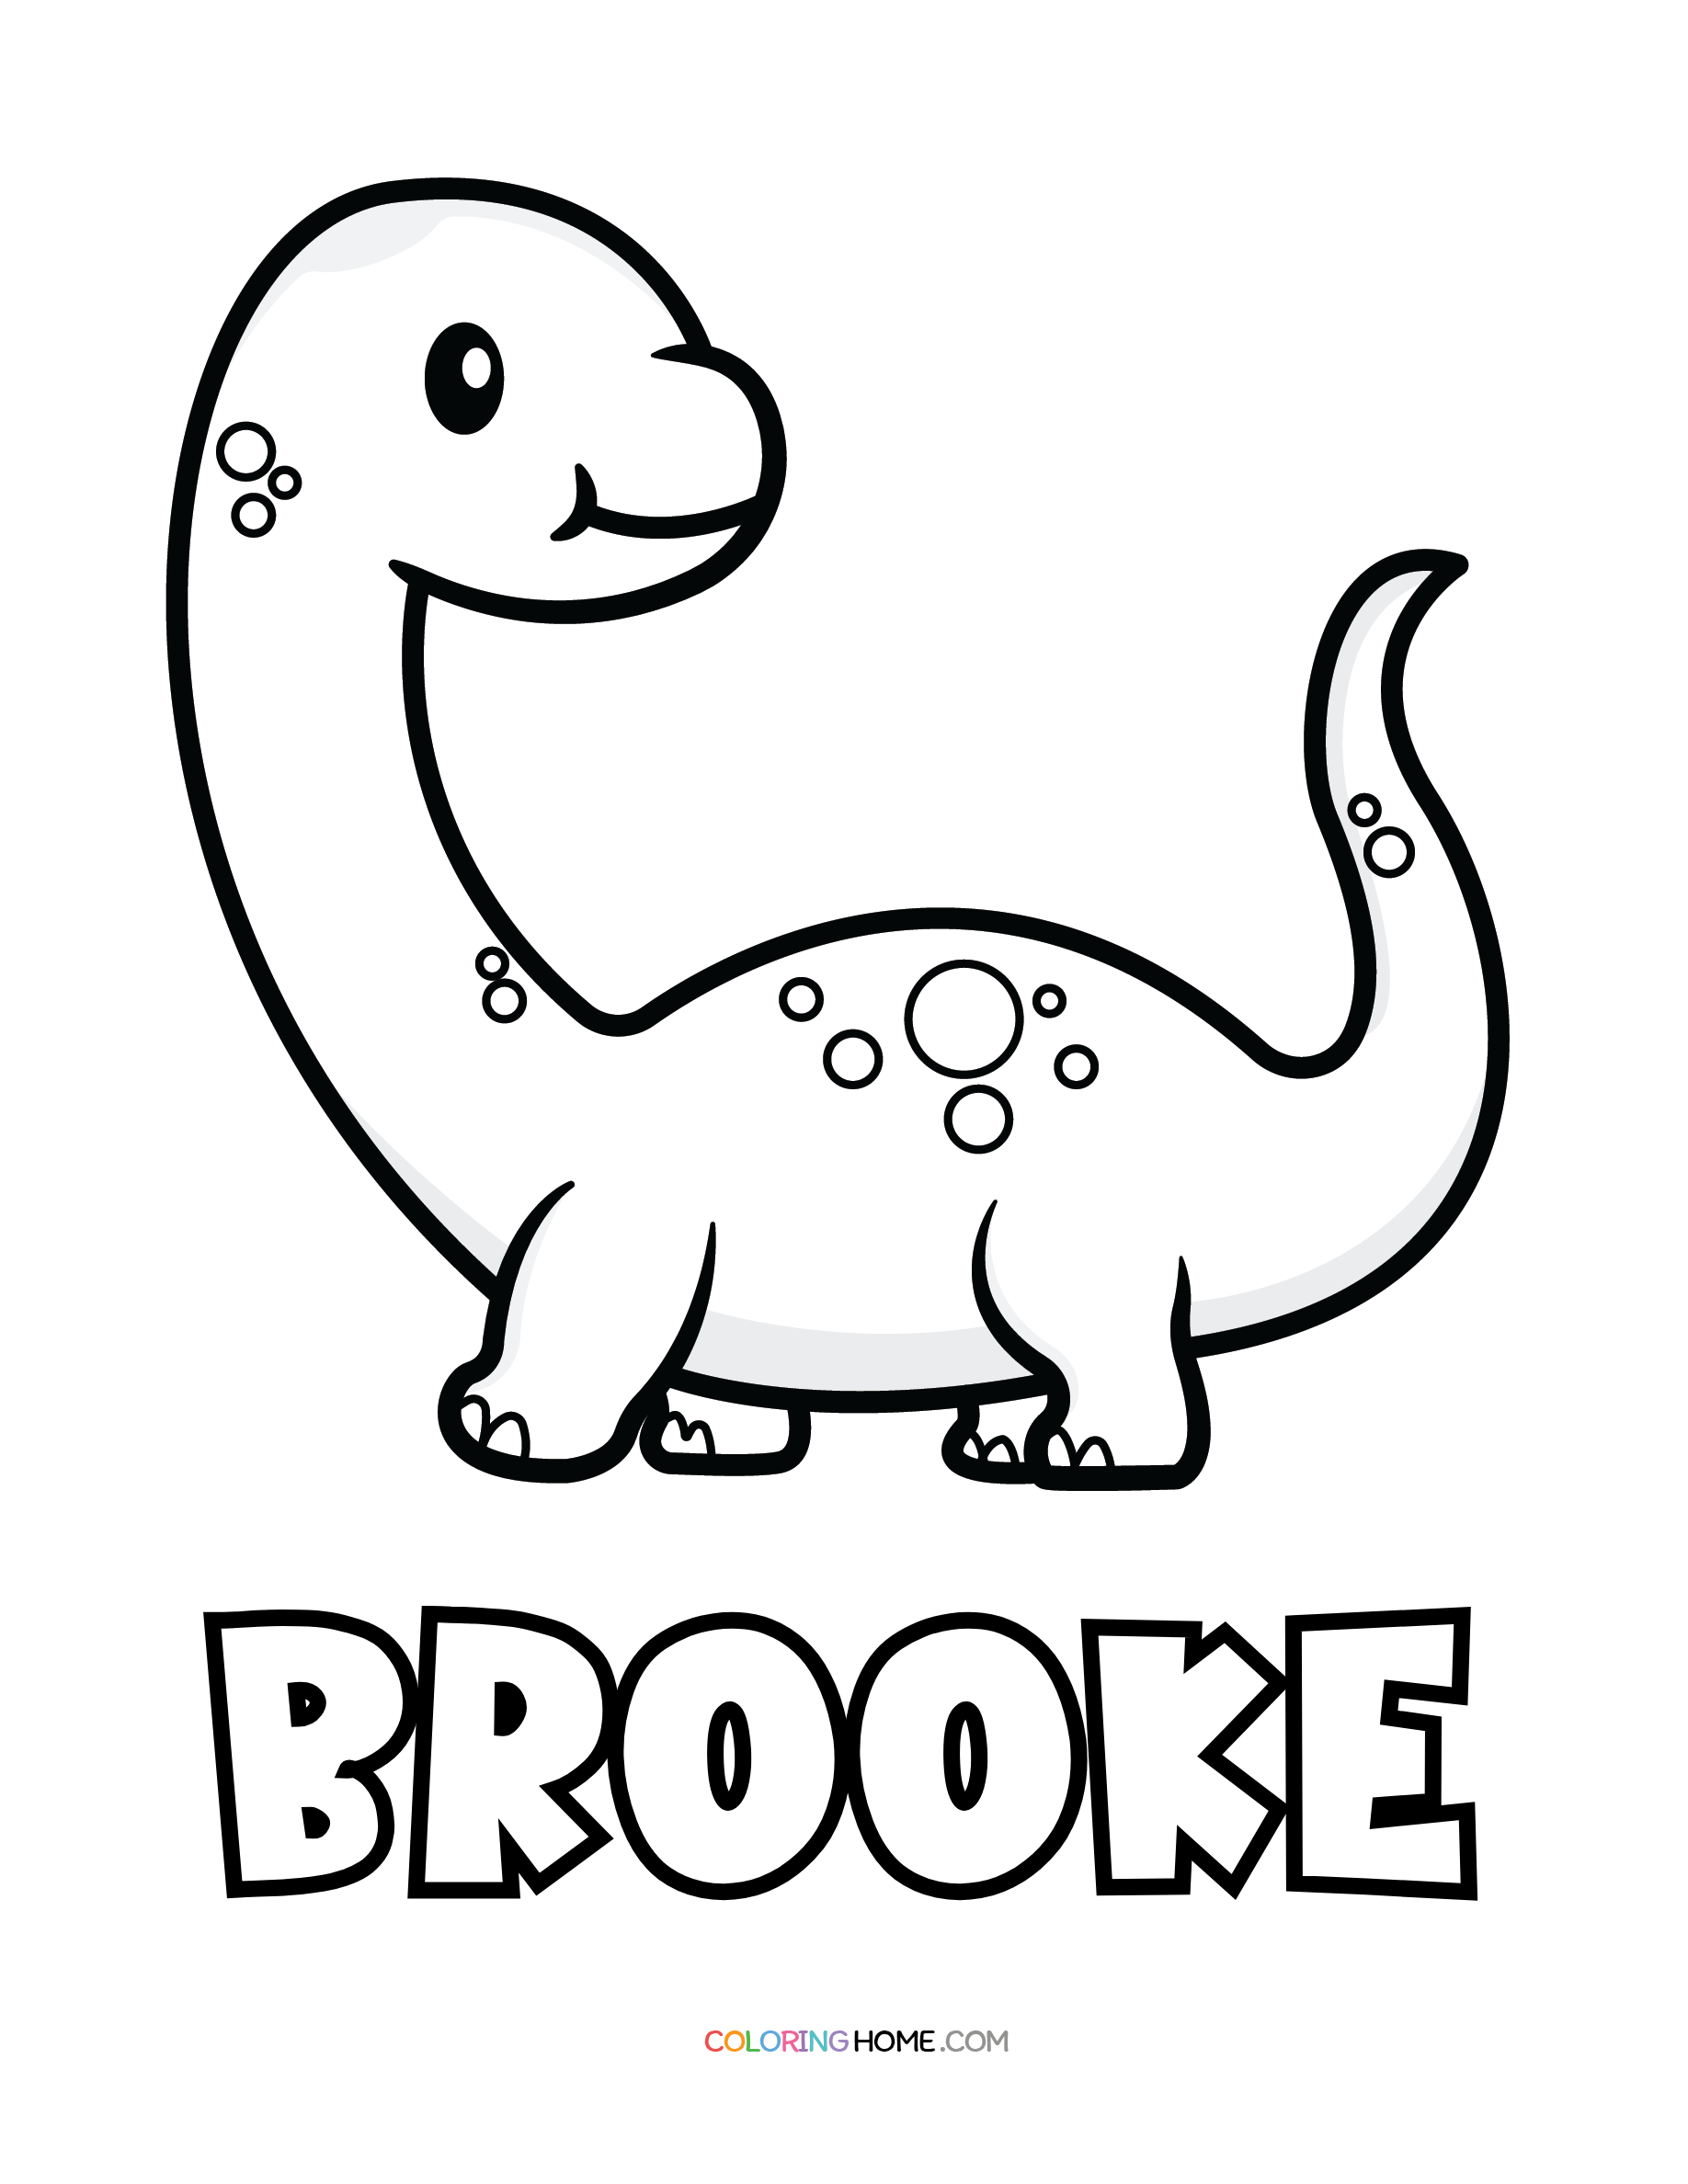 Brooke dinosaur coloring page